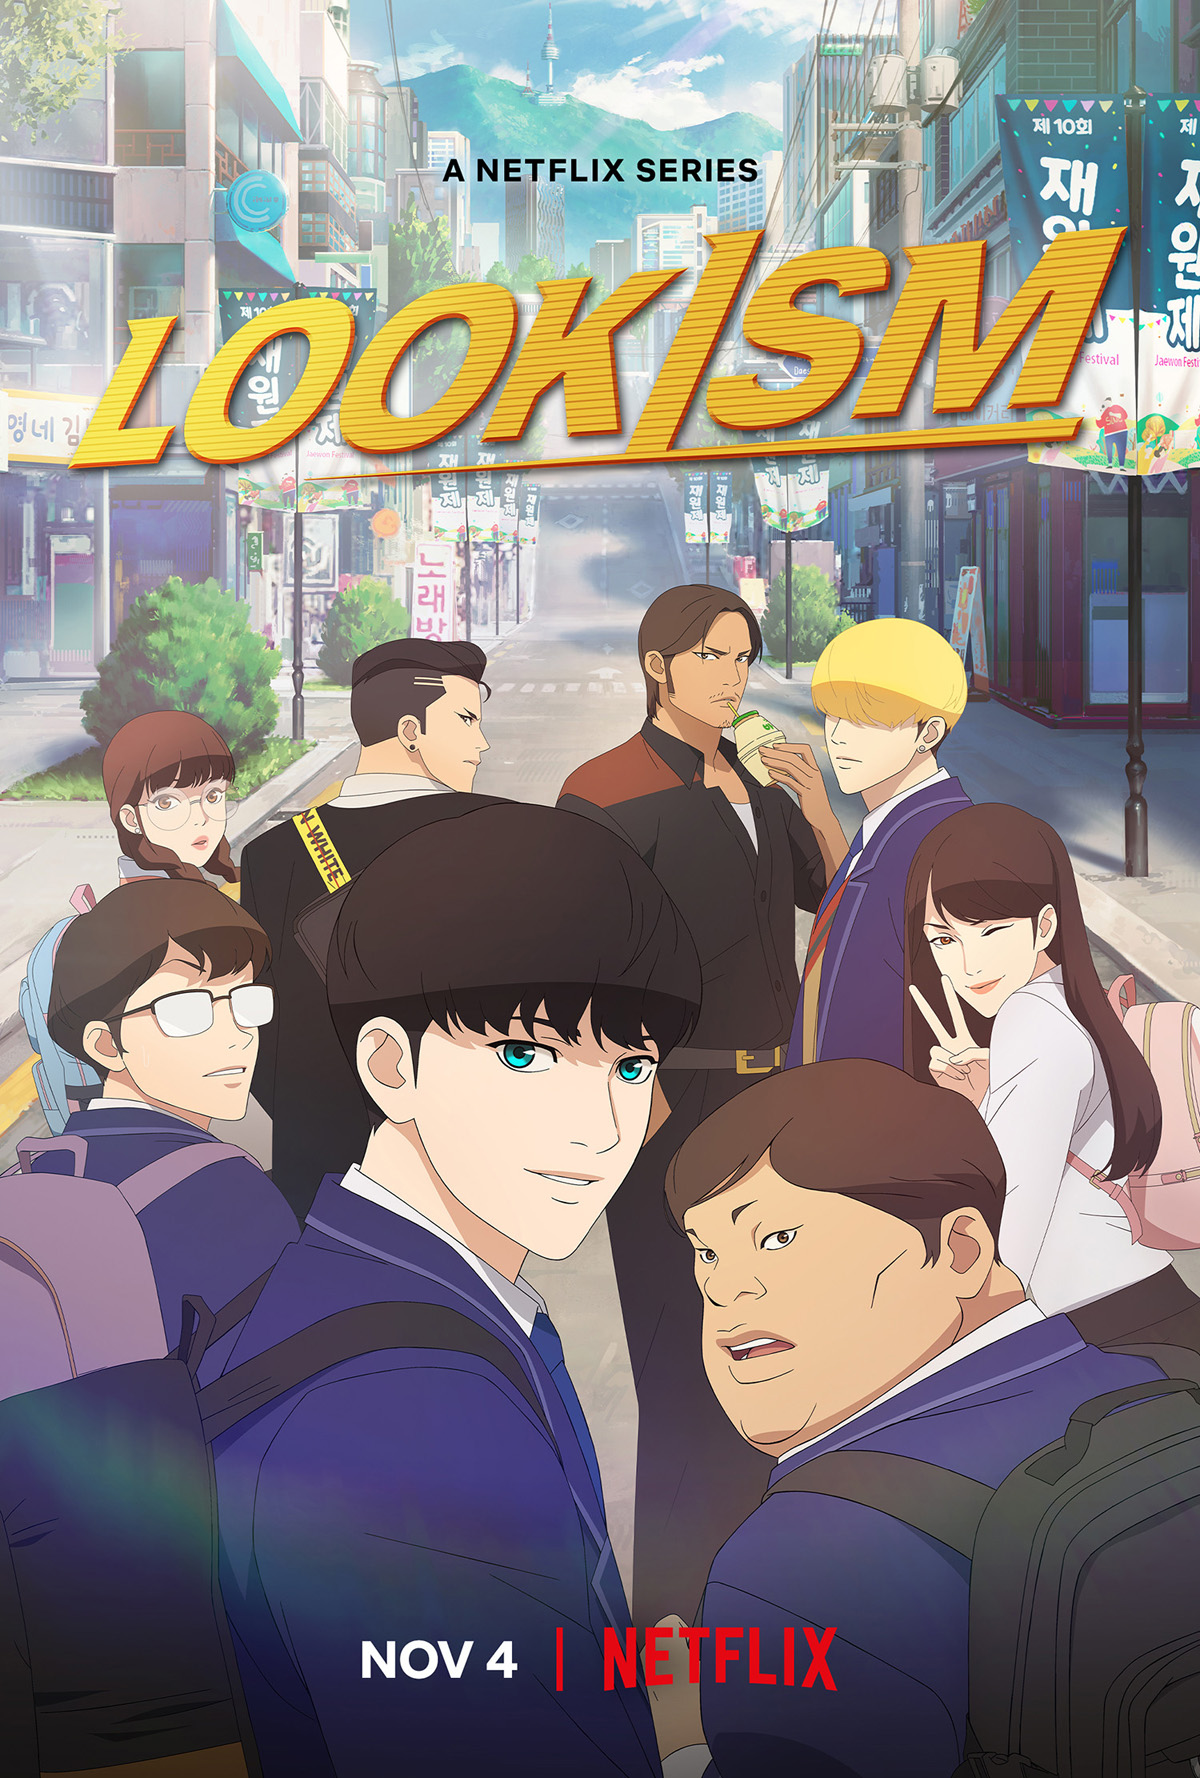 Lookism': Netflix drops trailer for animated series adaption of Korean  webtoon